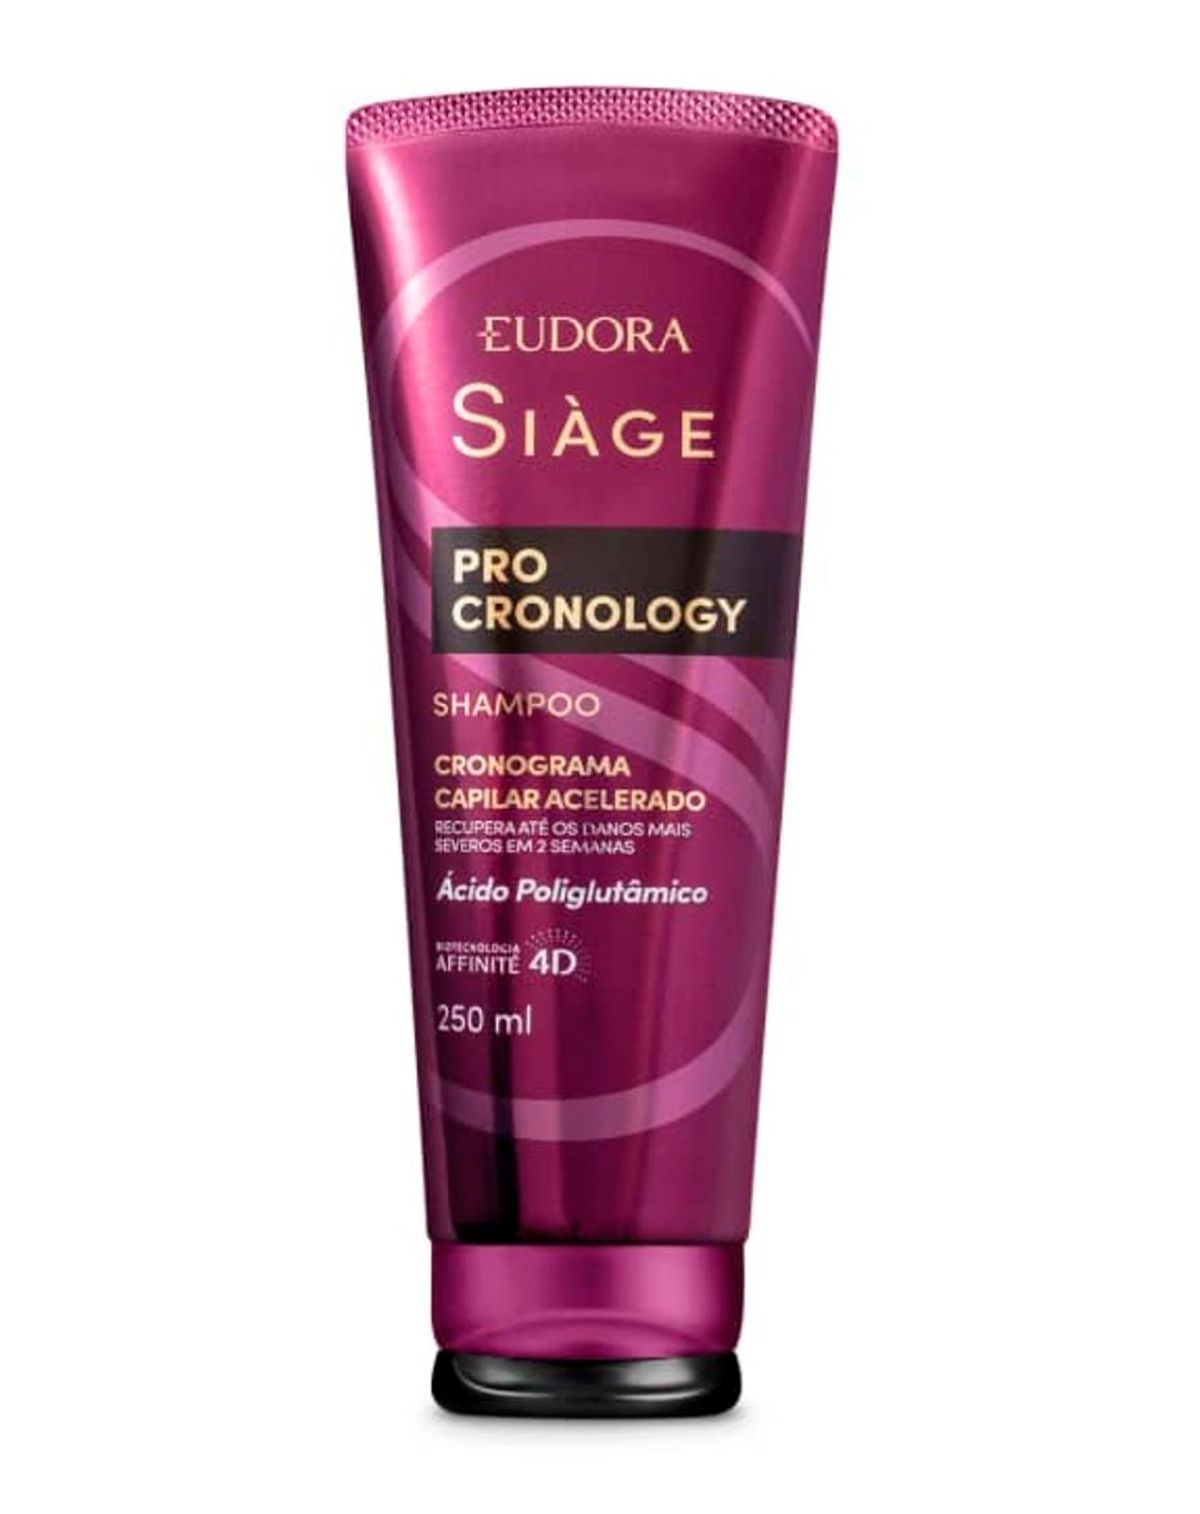 687194001-shampoo-siage-pro-cronology---250ml-unica-u-79a